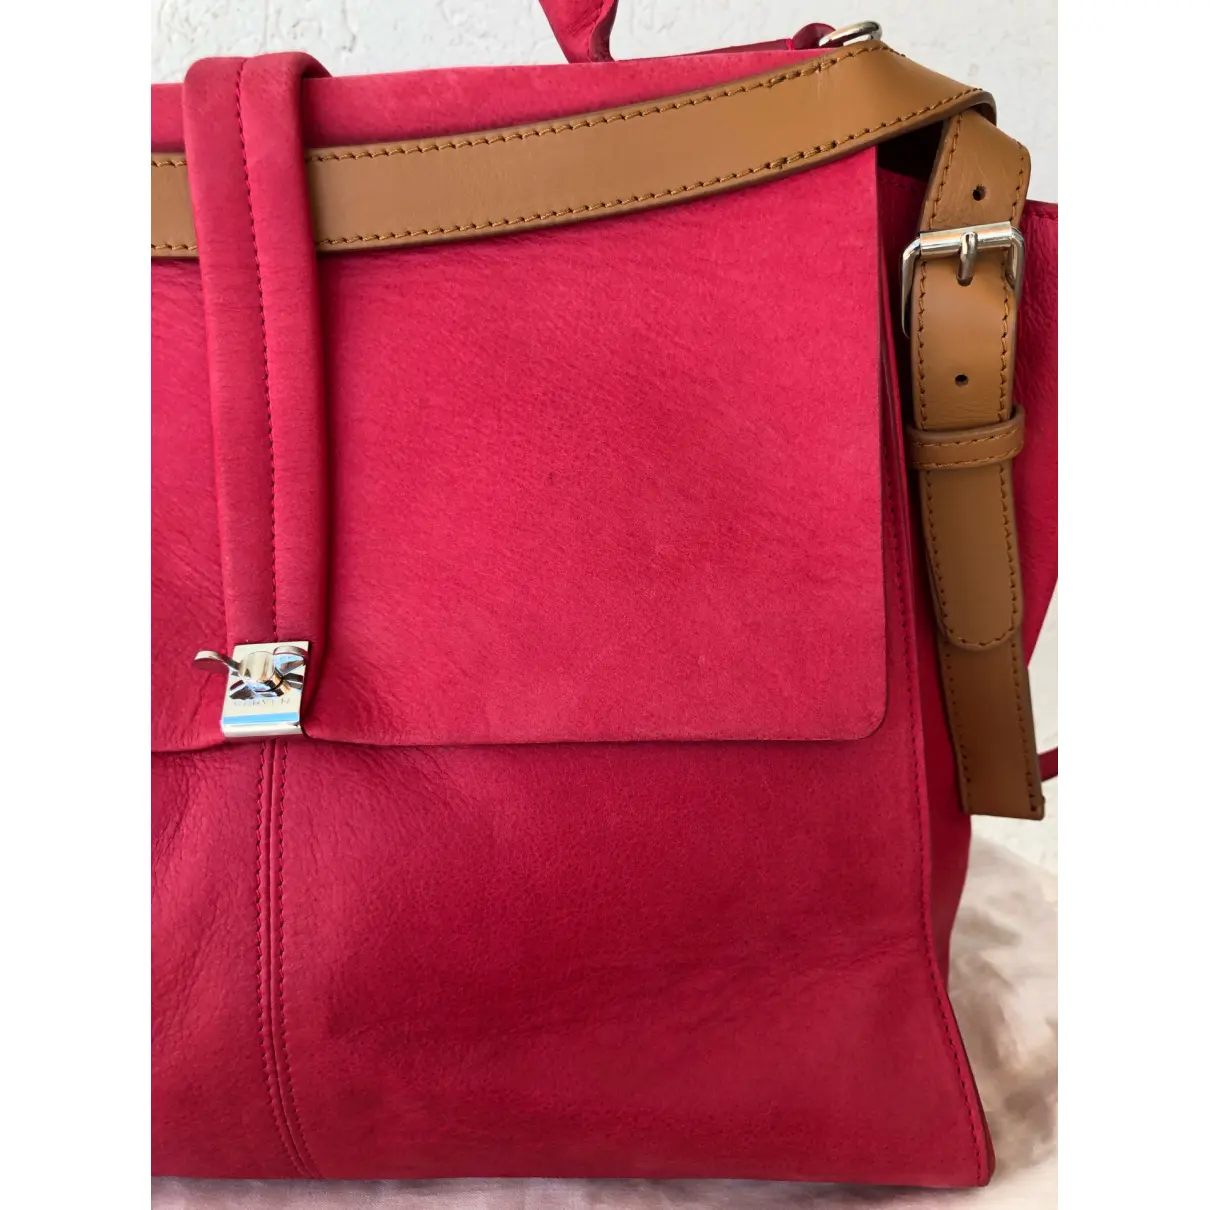 Buy Carven Leather satchel online